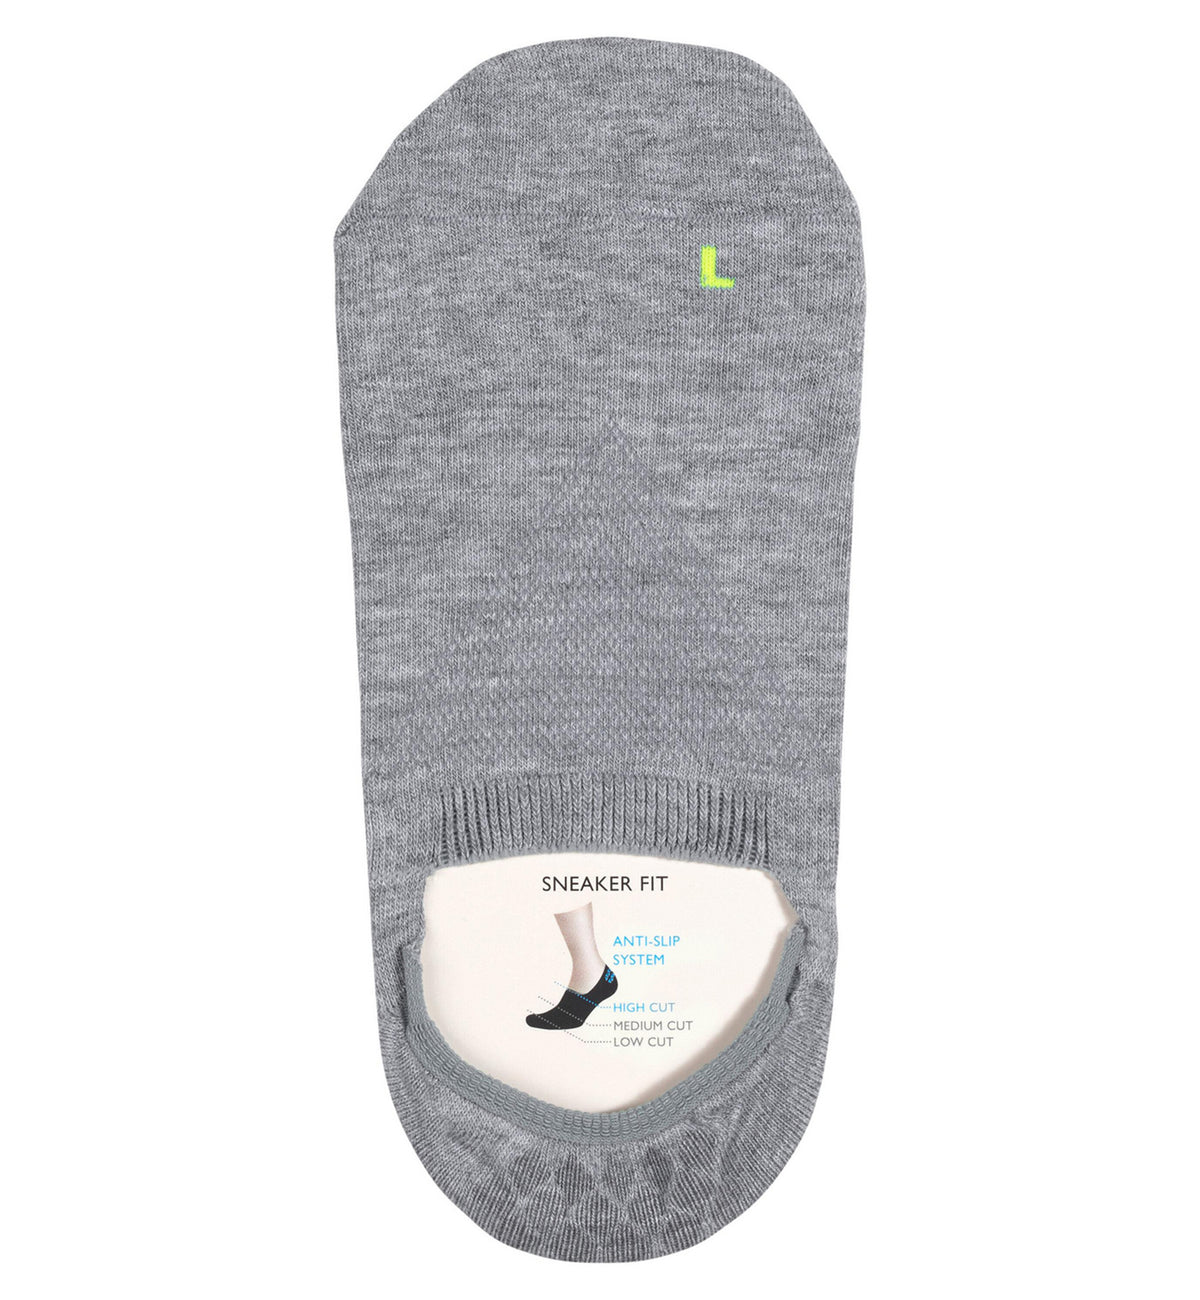 FALKE Cool Kick Invisible Socks (46296),6.5/7.5,Light Grey - Light Grey,6.5/7.5